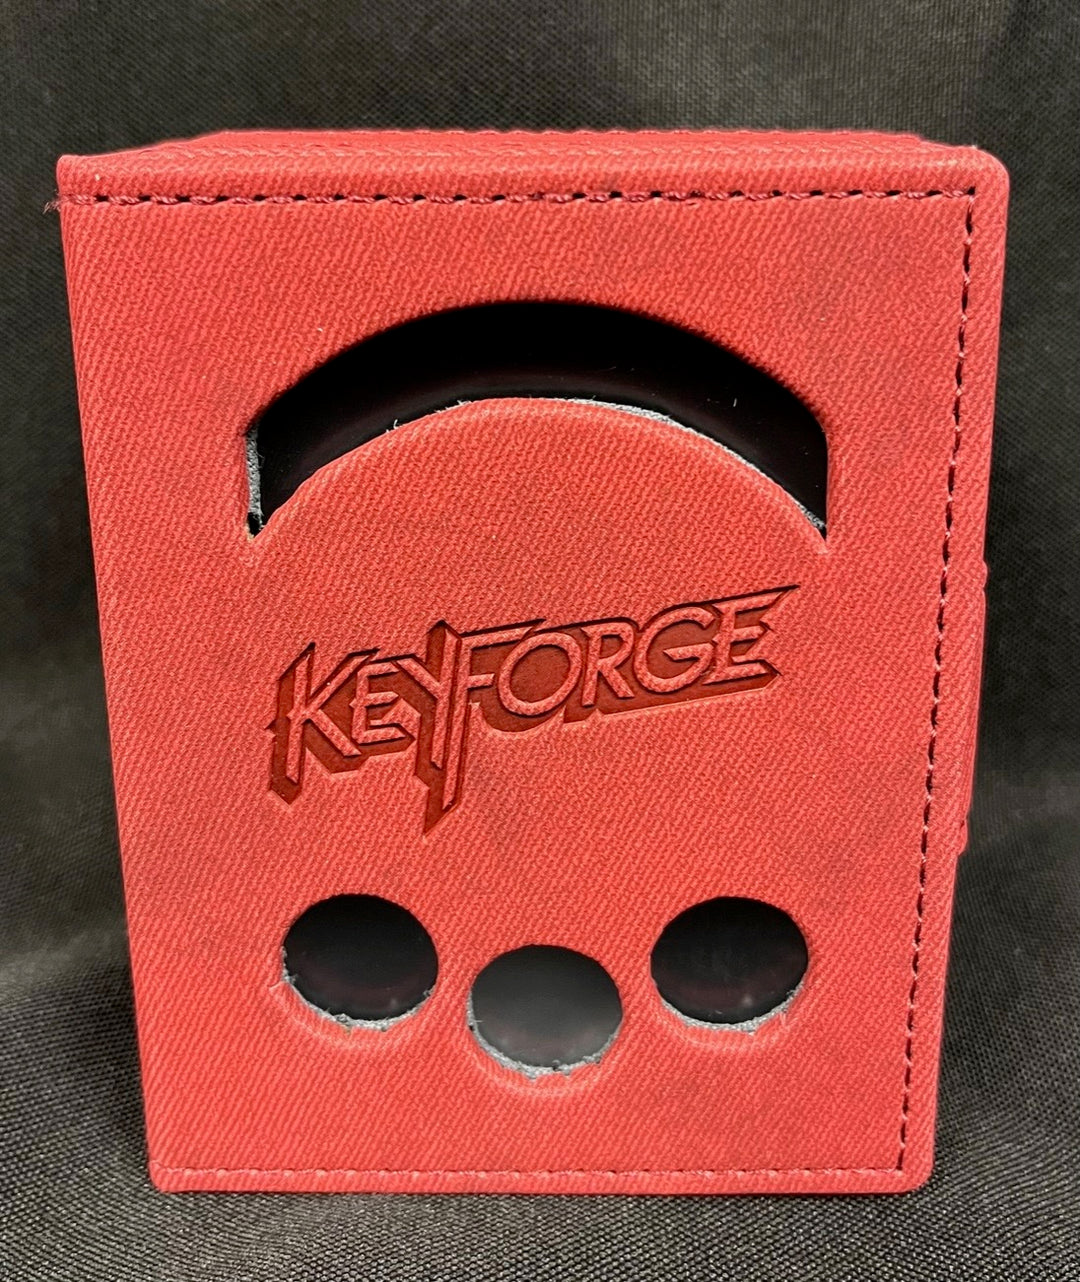 KeyForge: Deck Book - Red